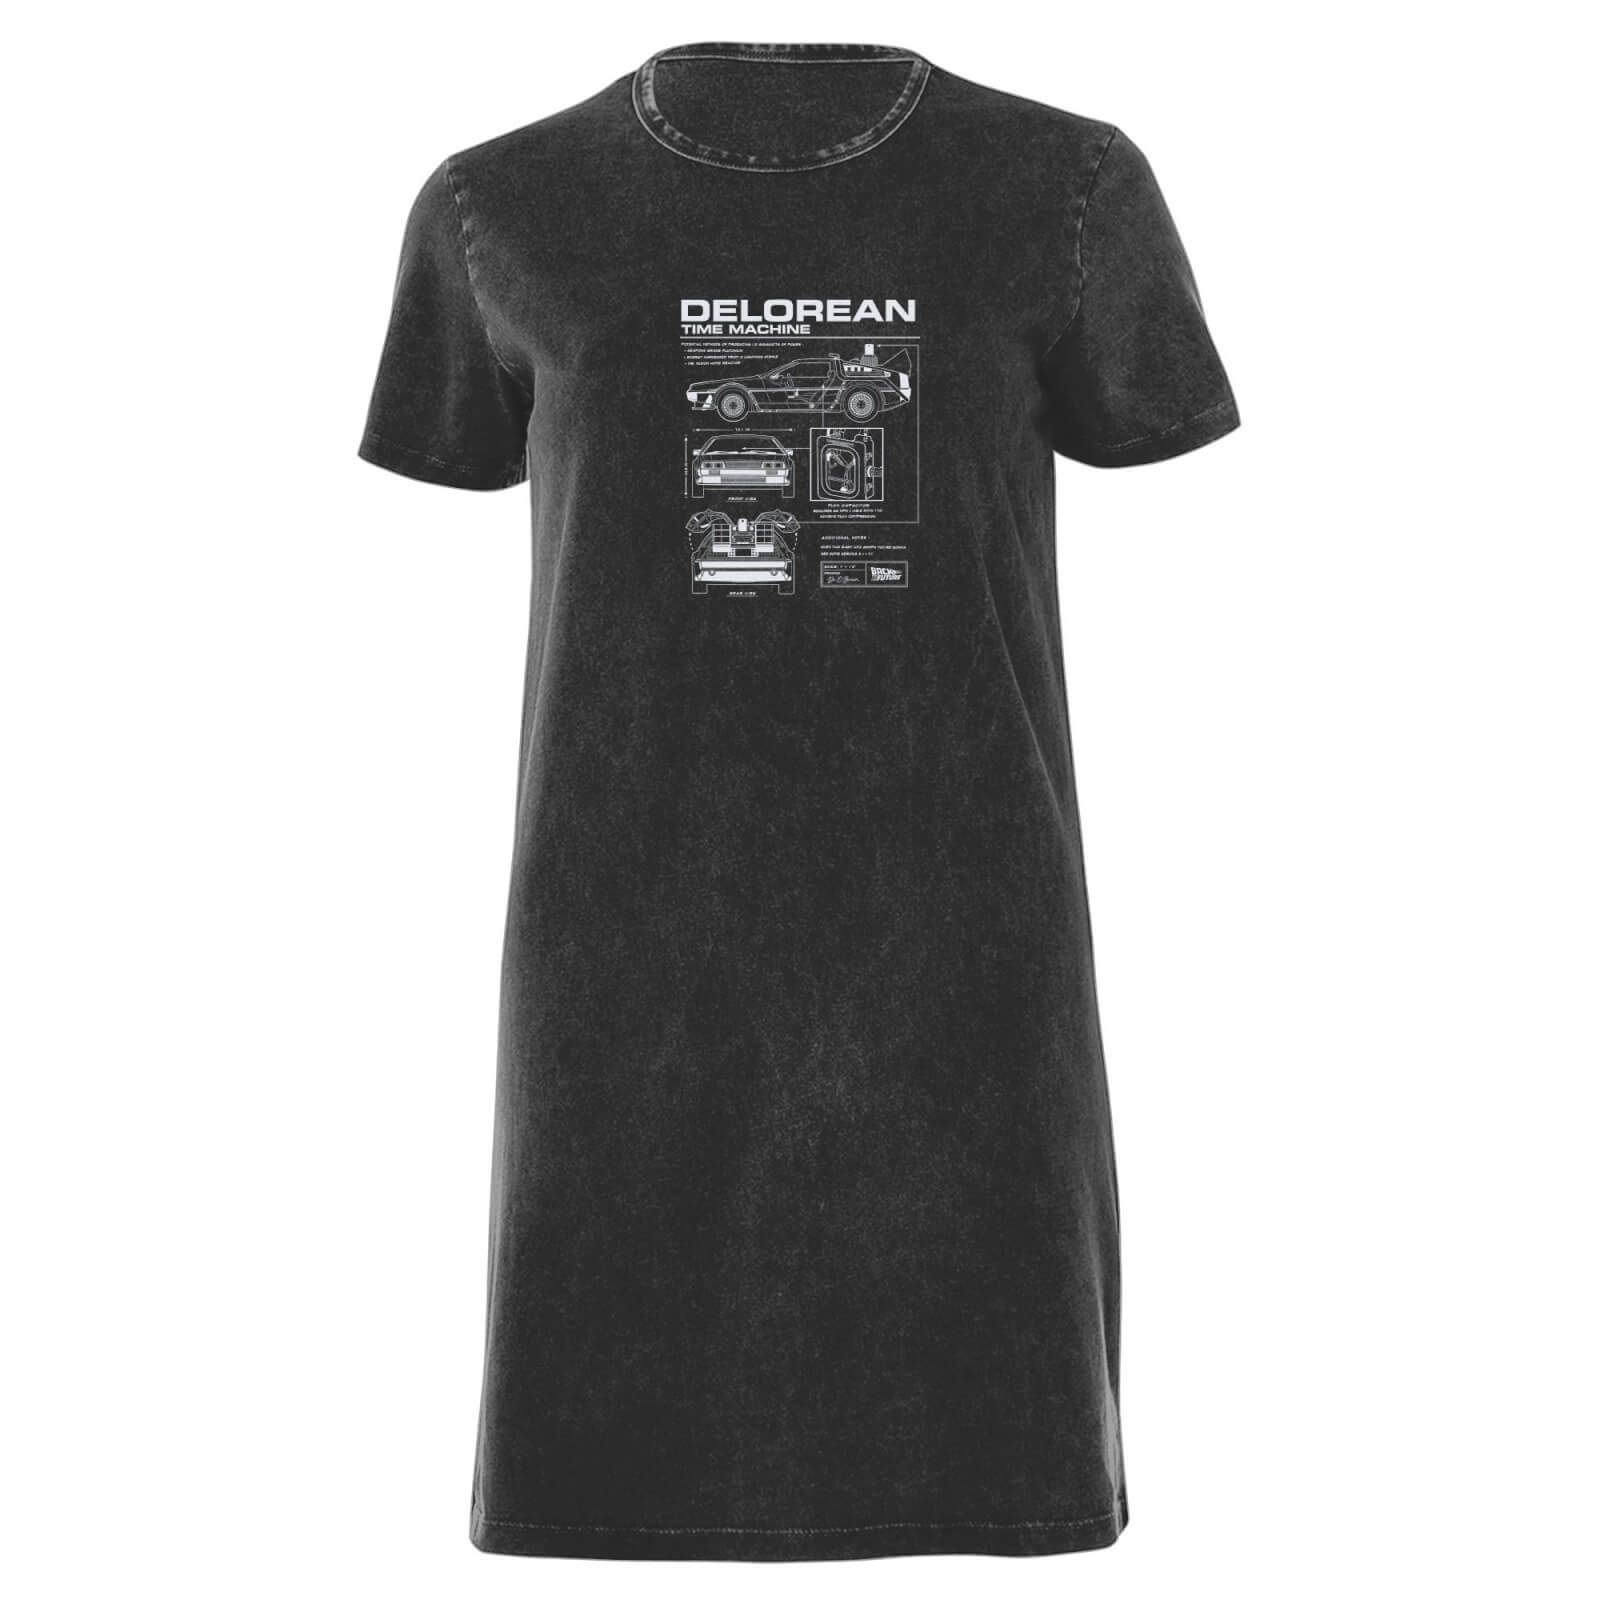 Back To The Future Delorian Women's T-Shirt Dress - Black Acid Wash - S - Black Acid Wash